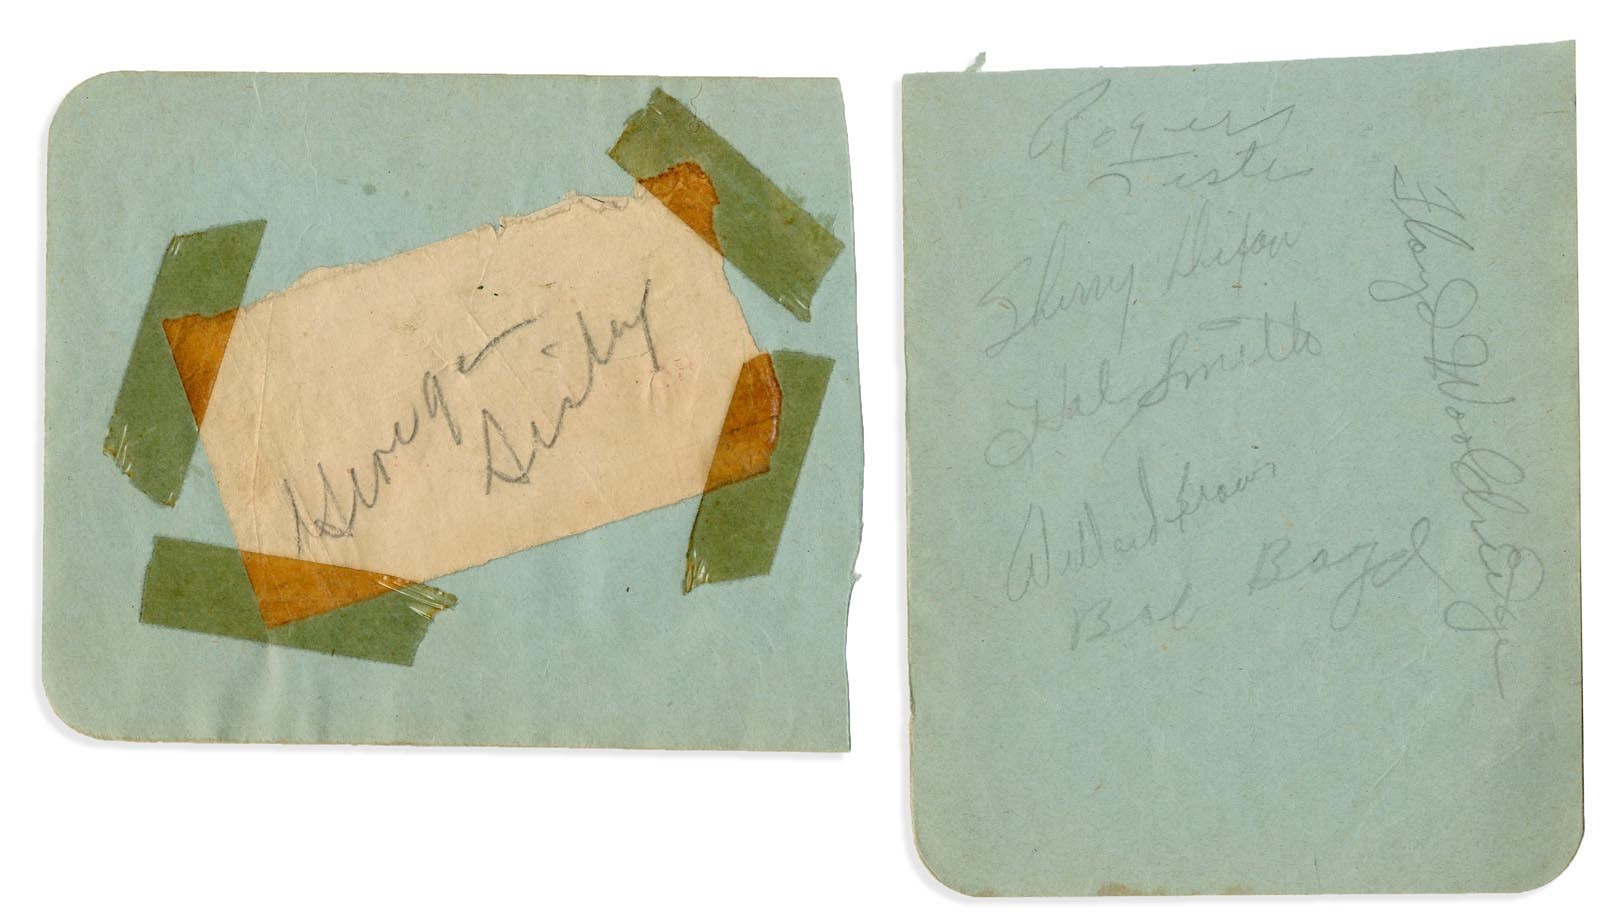 Willard Brown and George Sisler Autographs